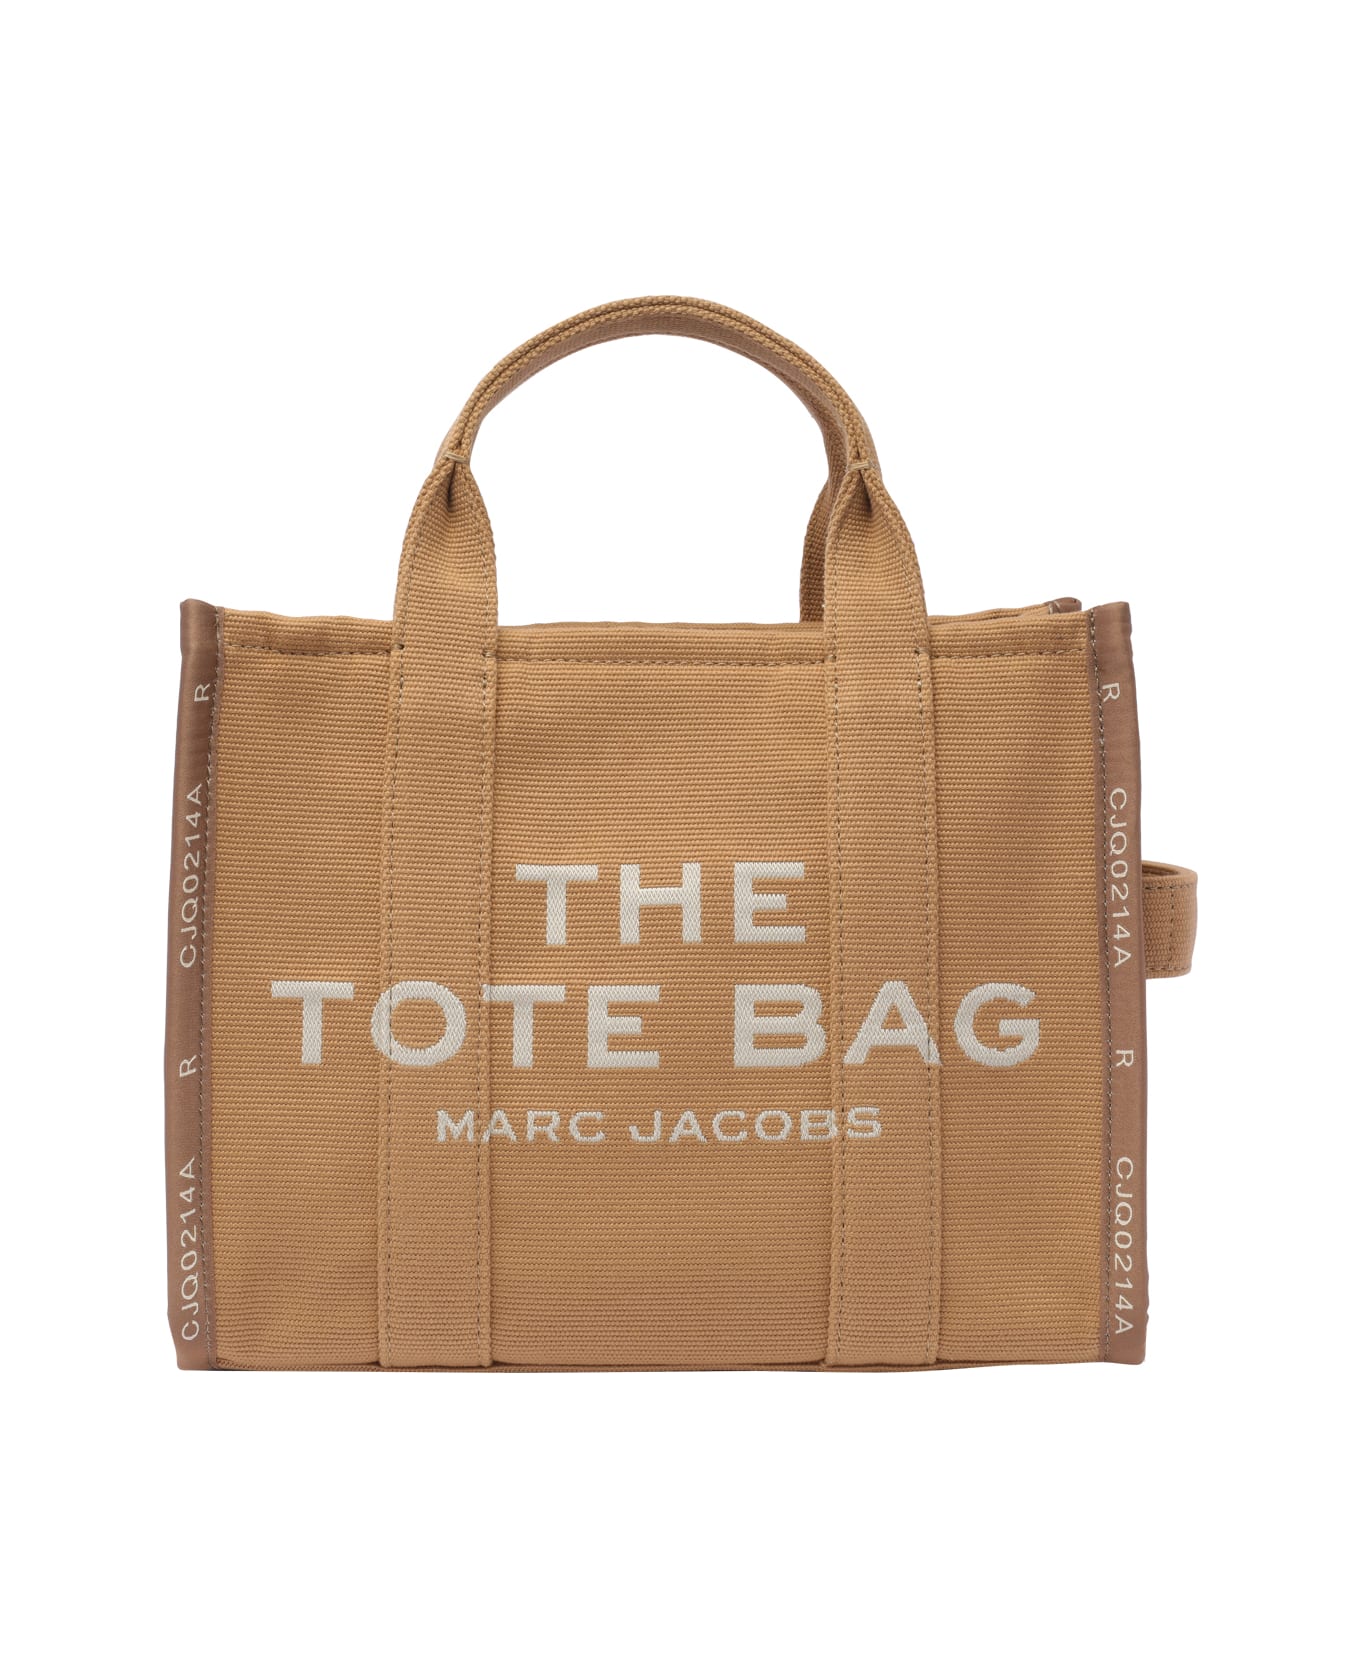 Marc Jacobs The Medium Tote Bag - Camel